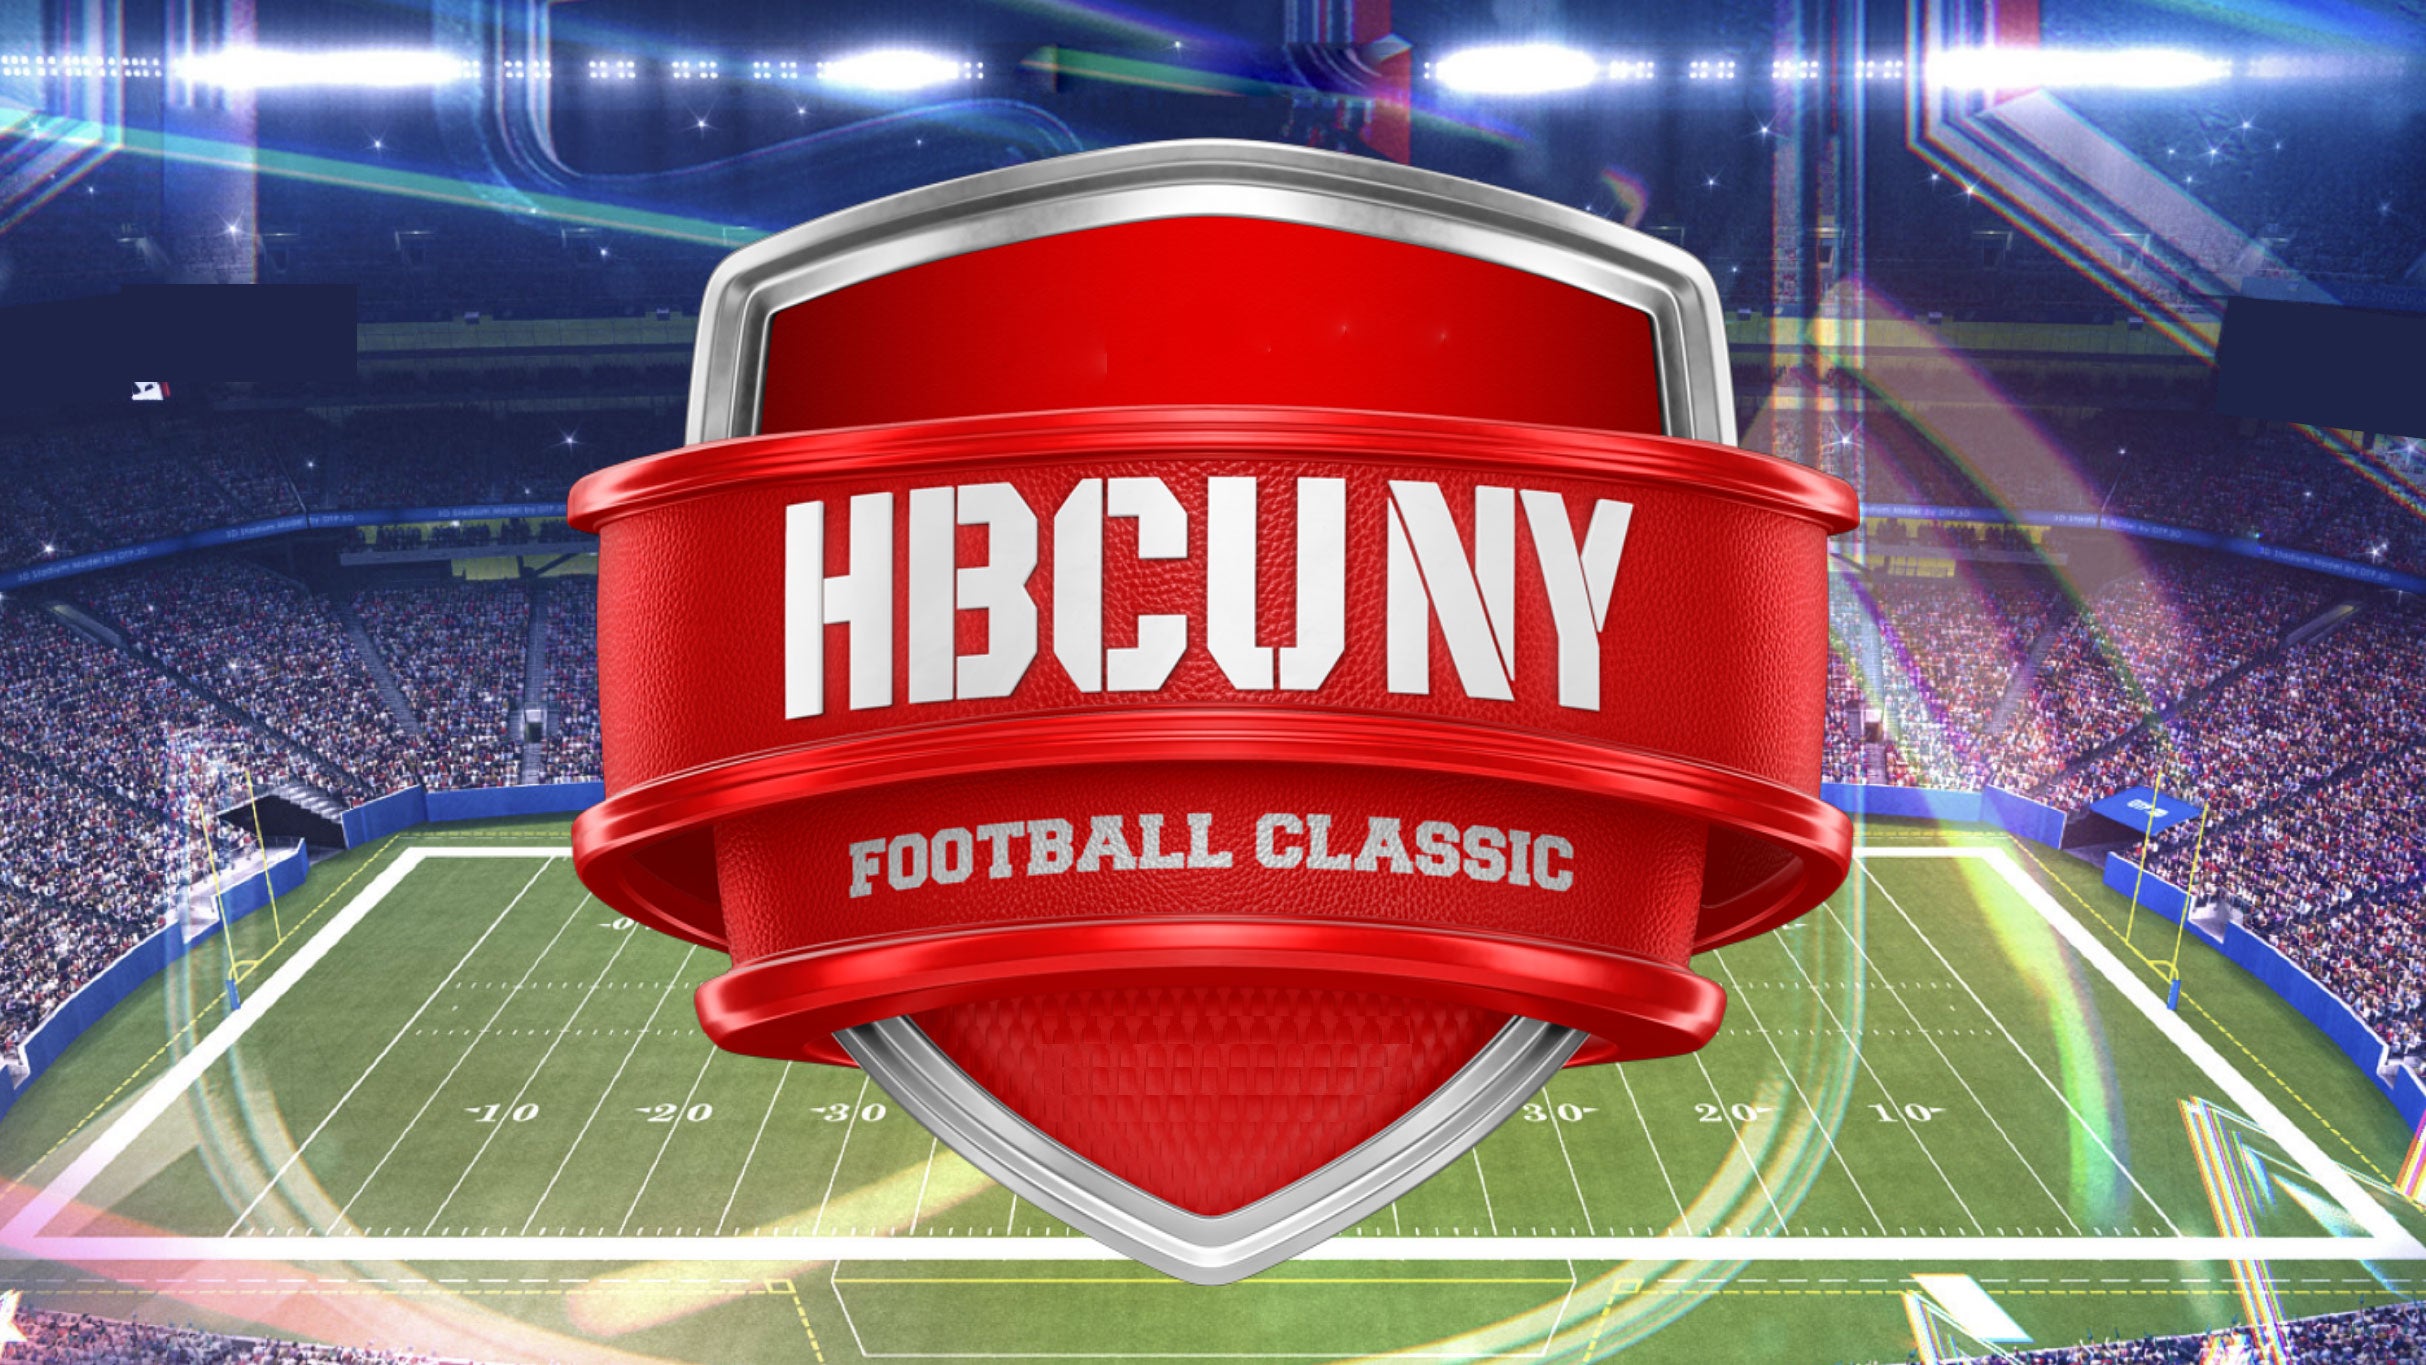 HBCU New York Football Classic-Morehouse College v. Howard University hero